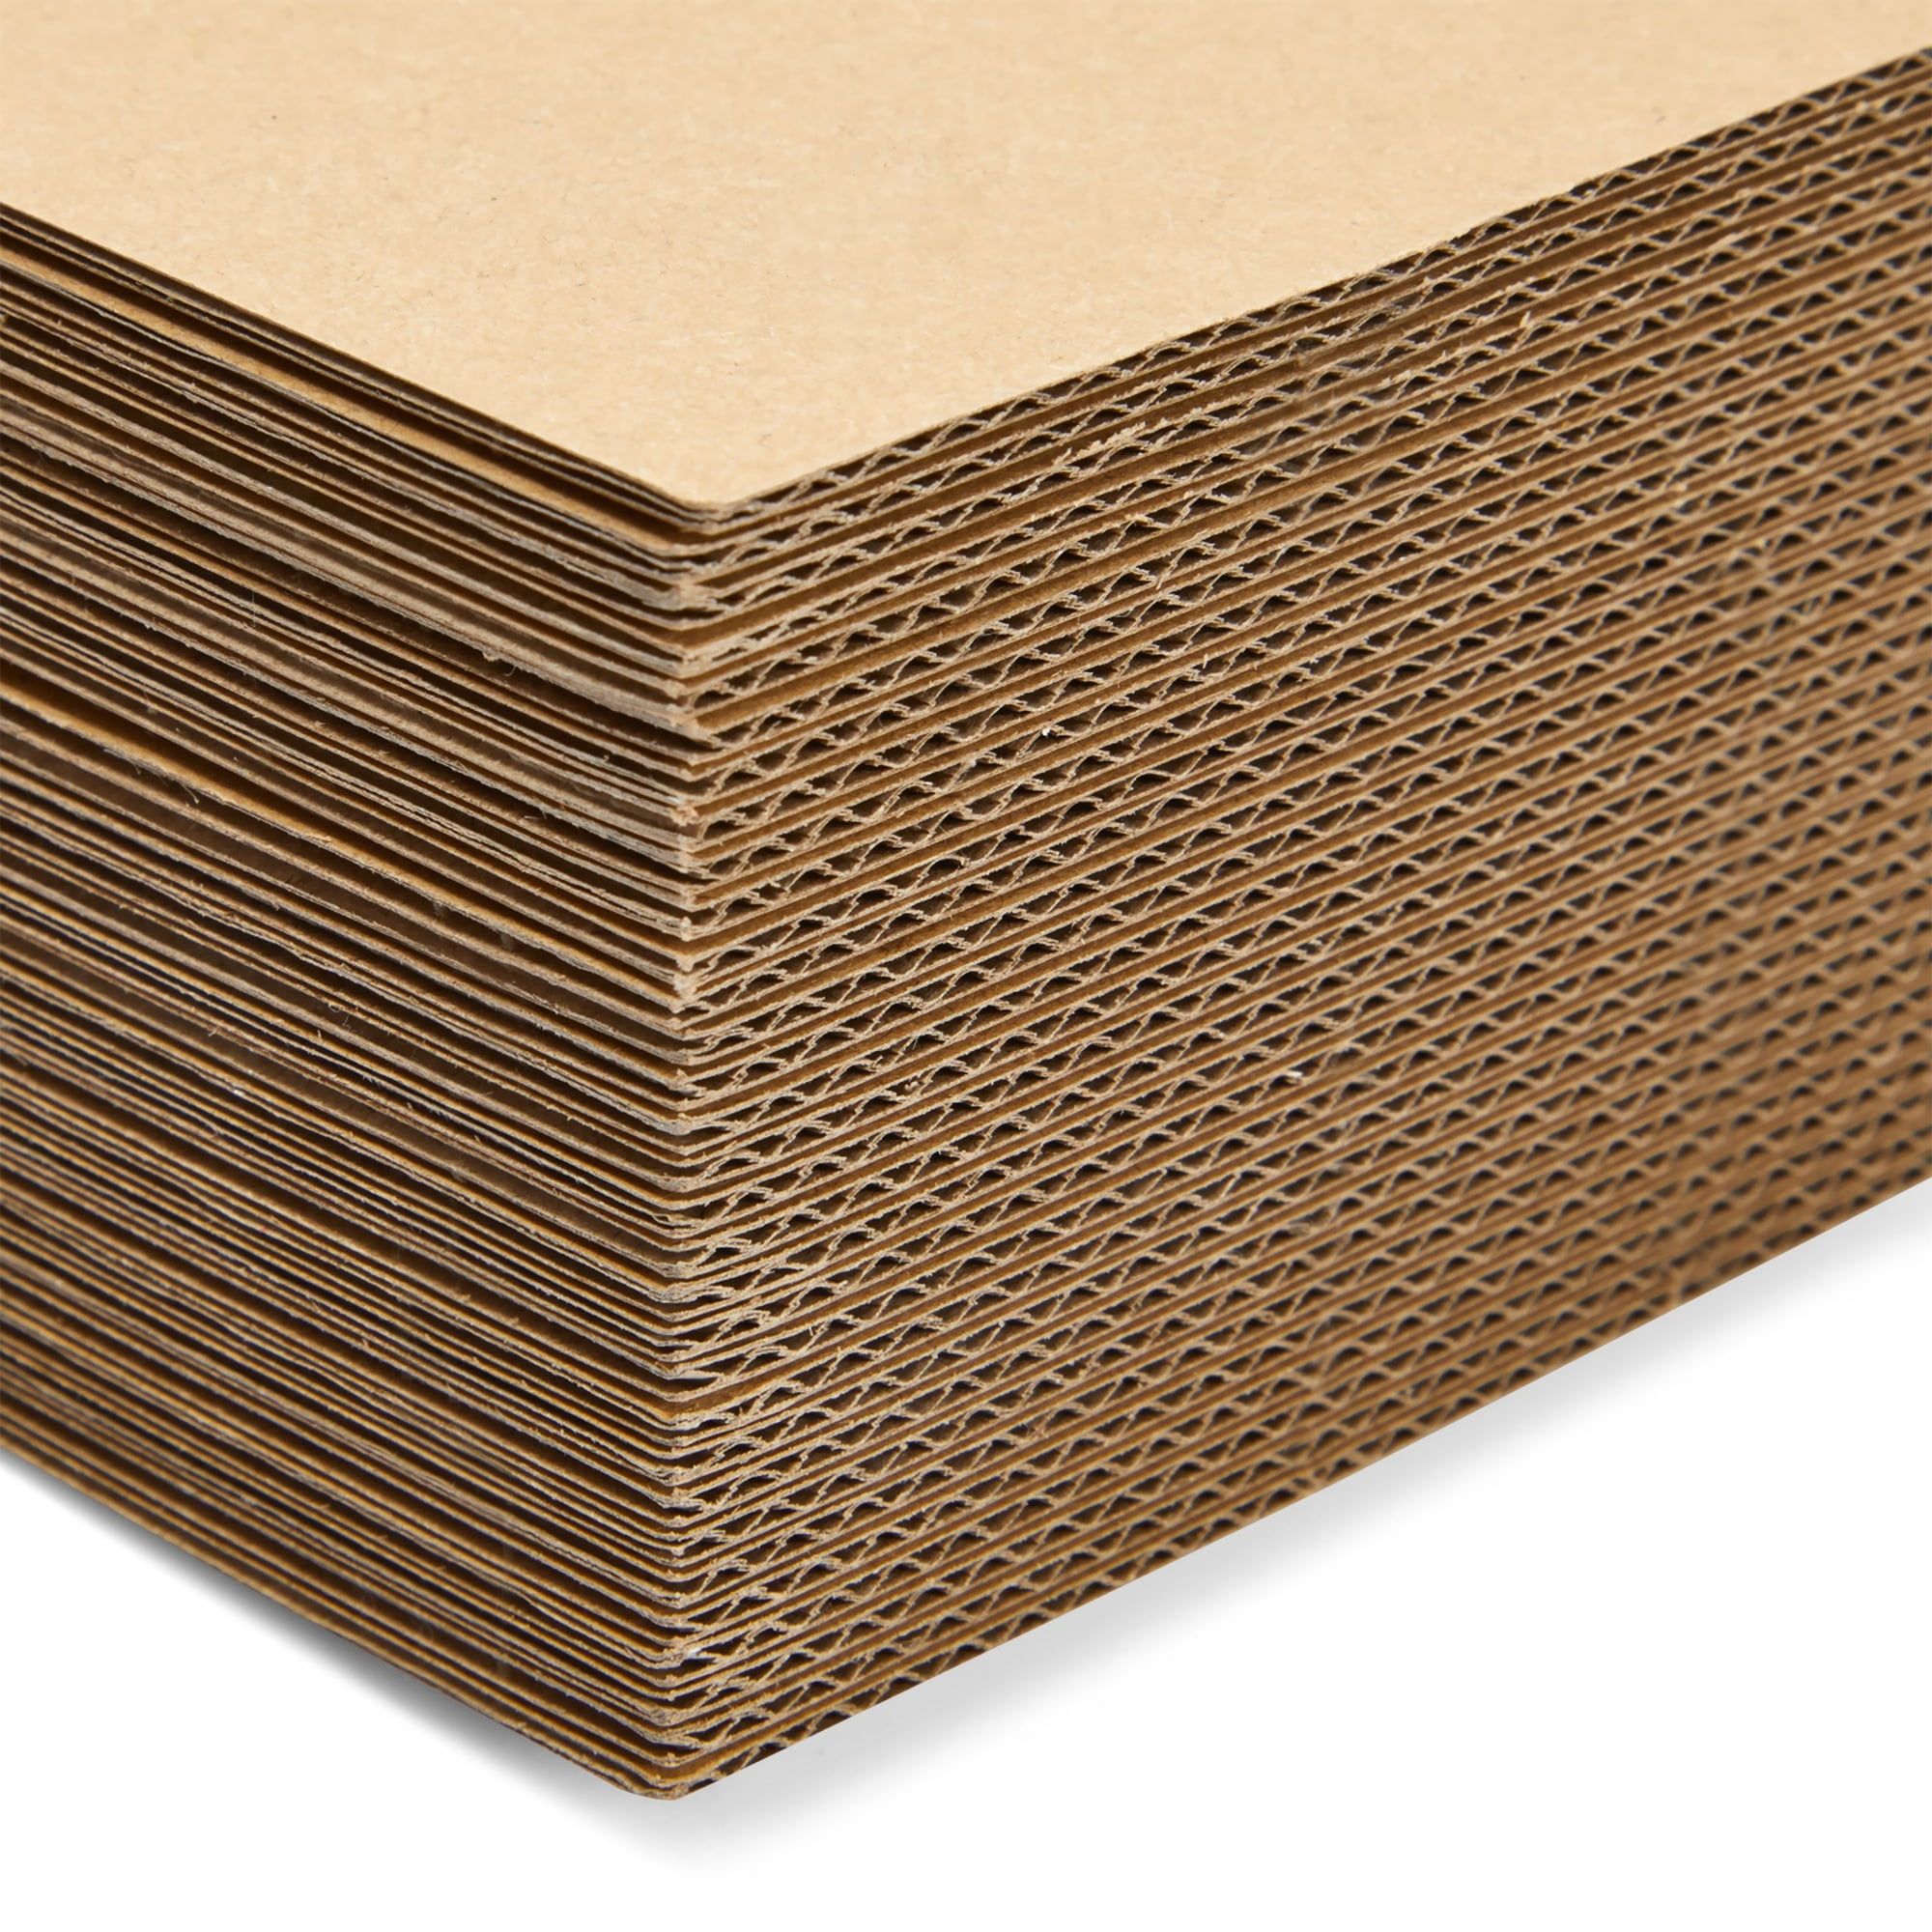 Sell thin cardboard sheets, Good quality thin cardboard sheets